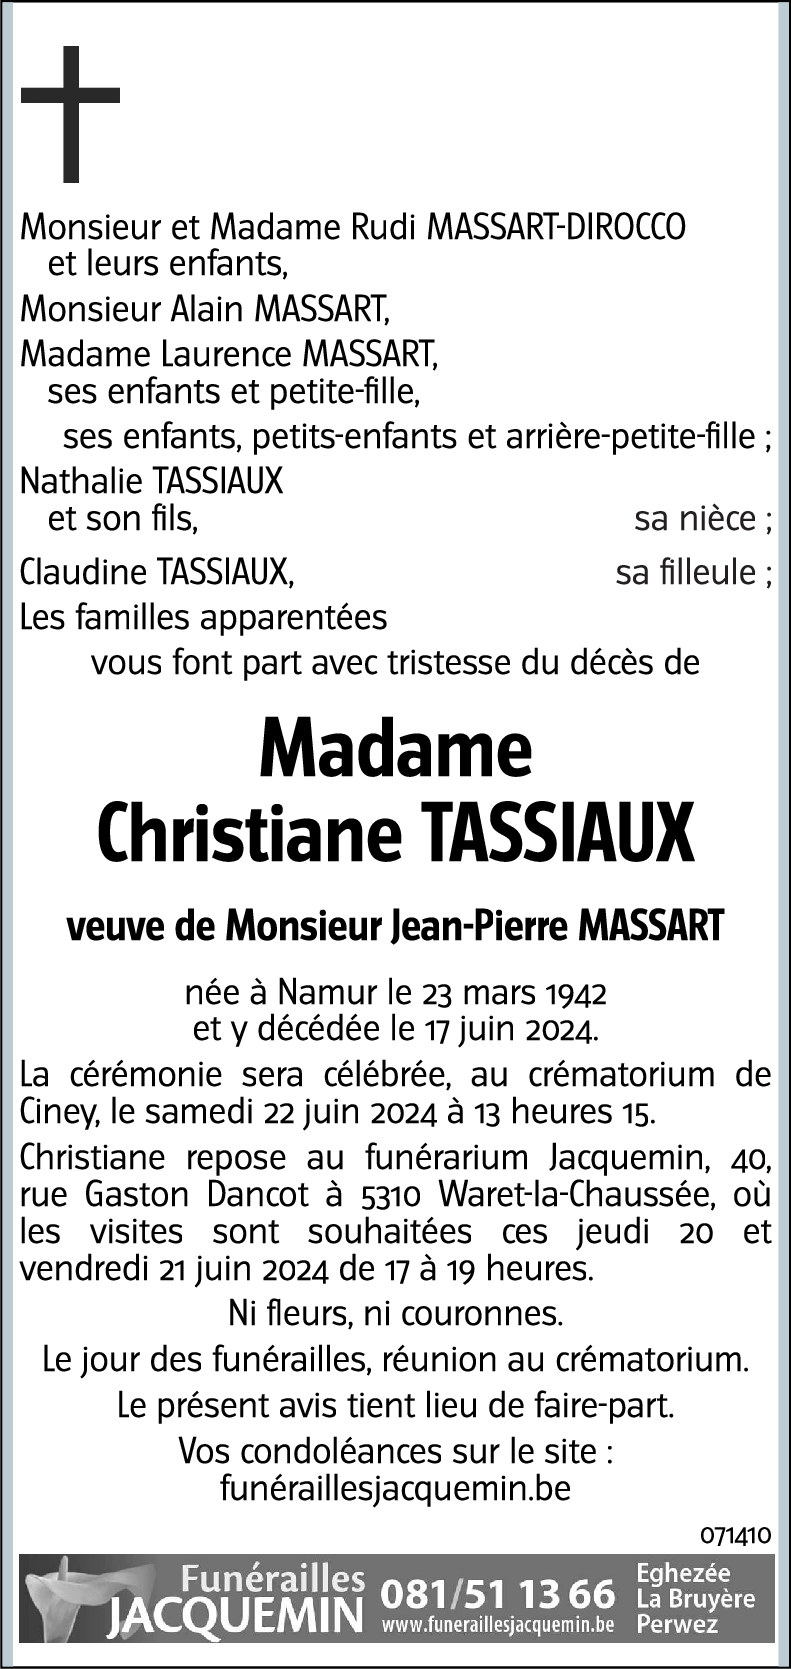 Christiane Tassiaux